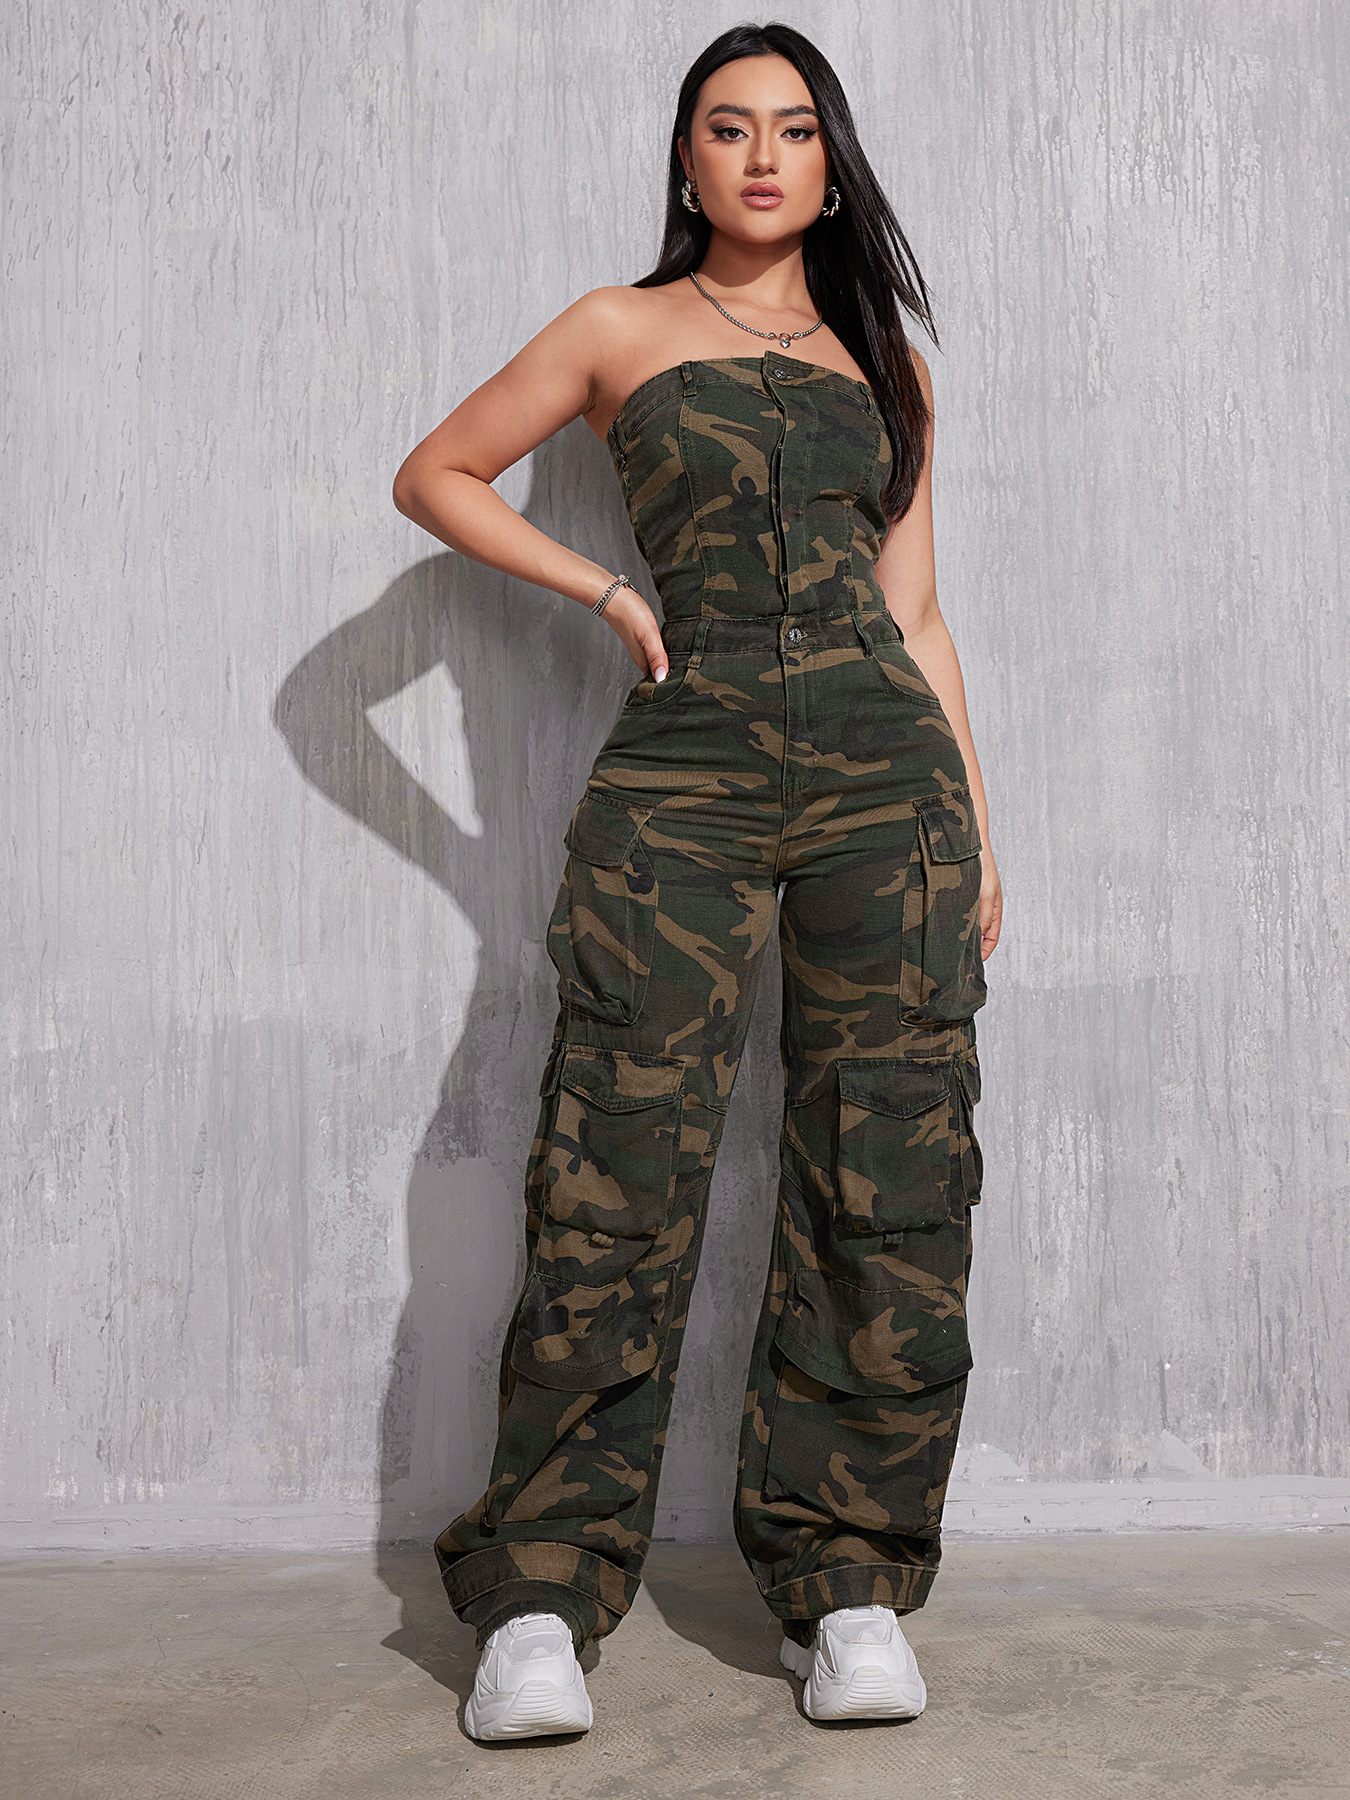 Women New Denim Jumpsuit Camouflage Overalls